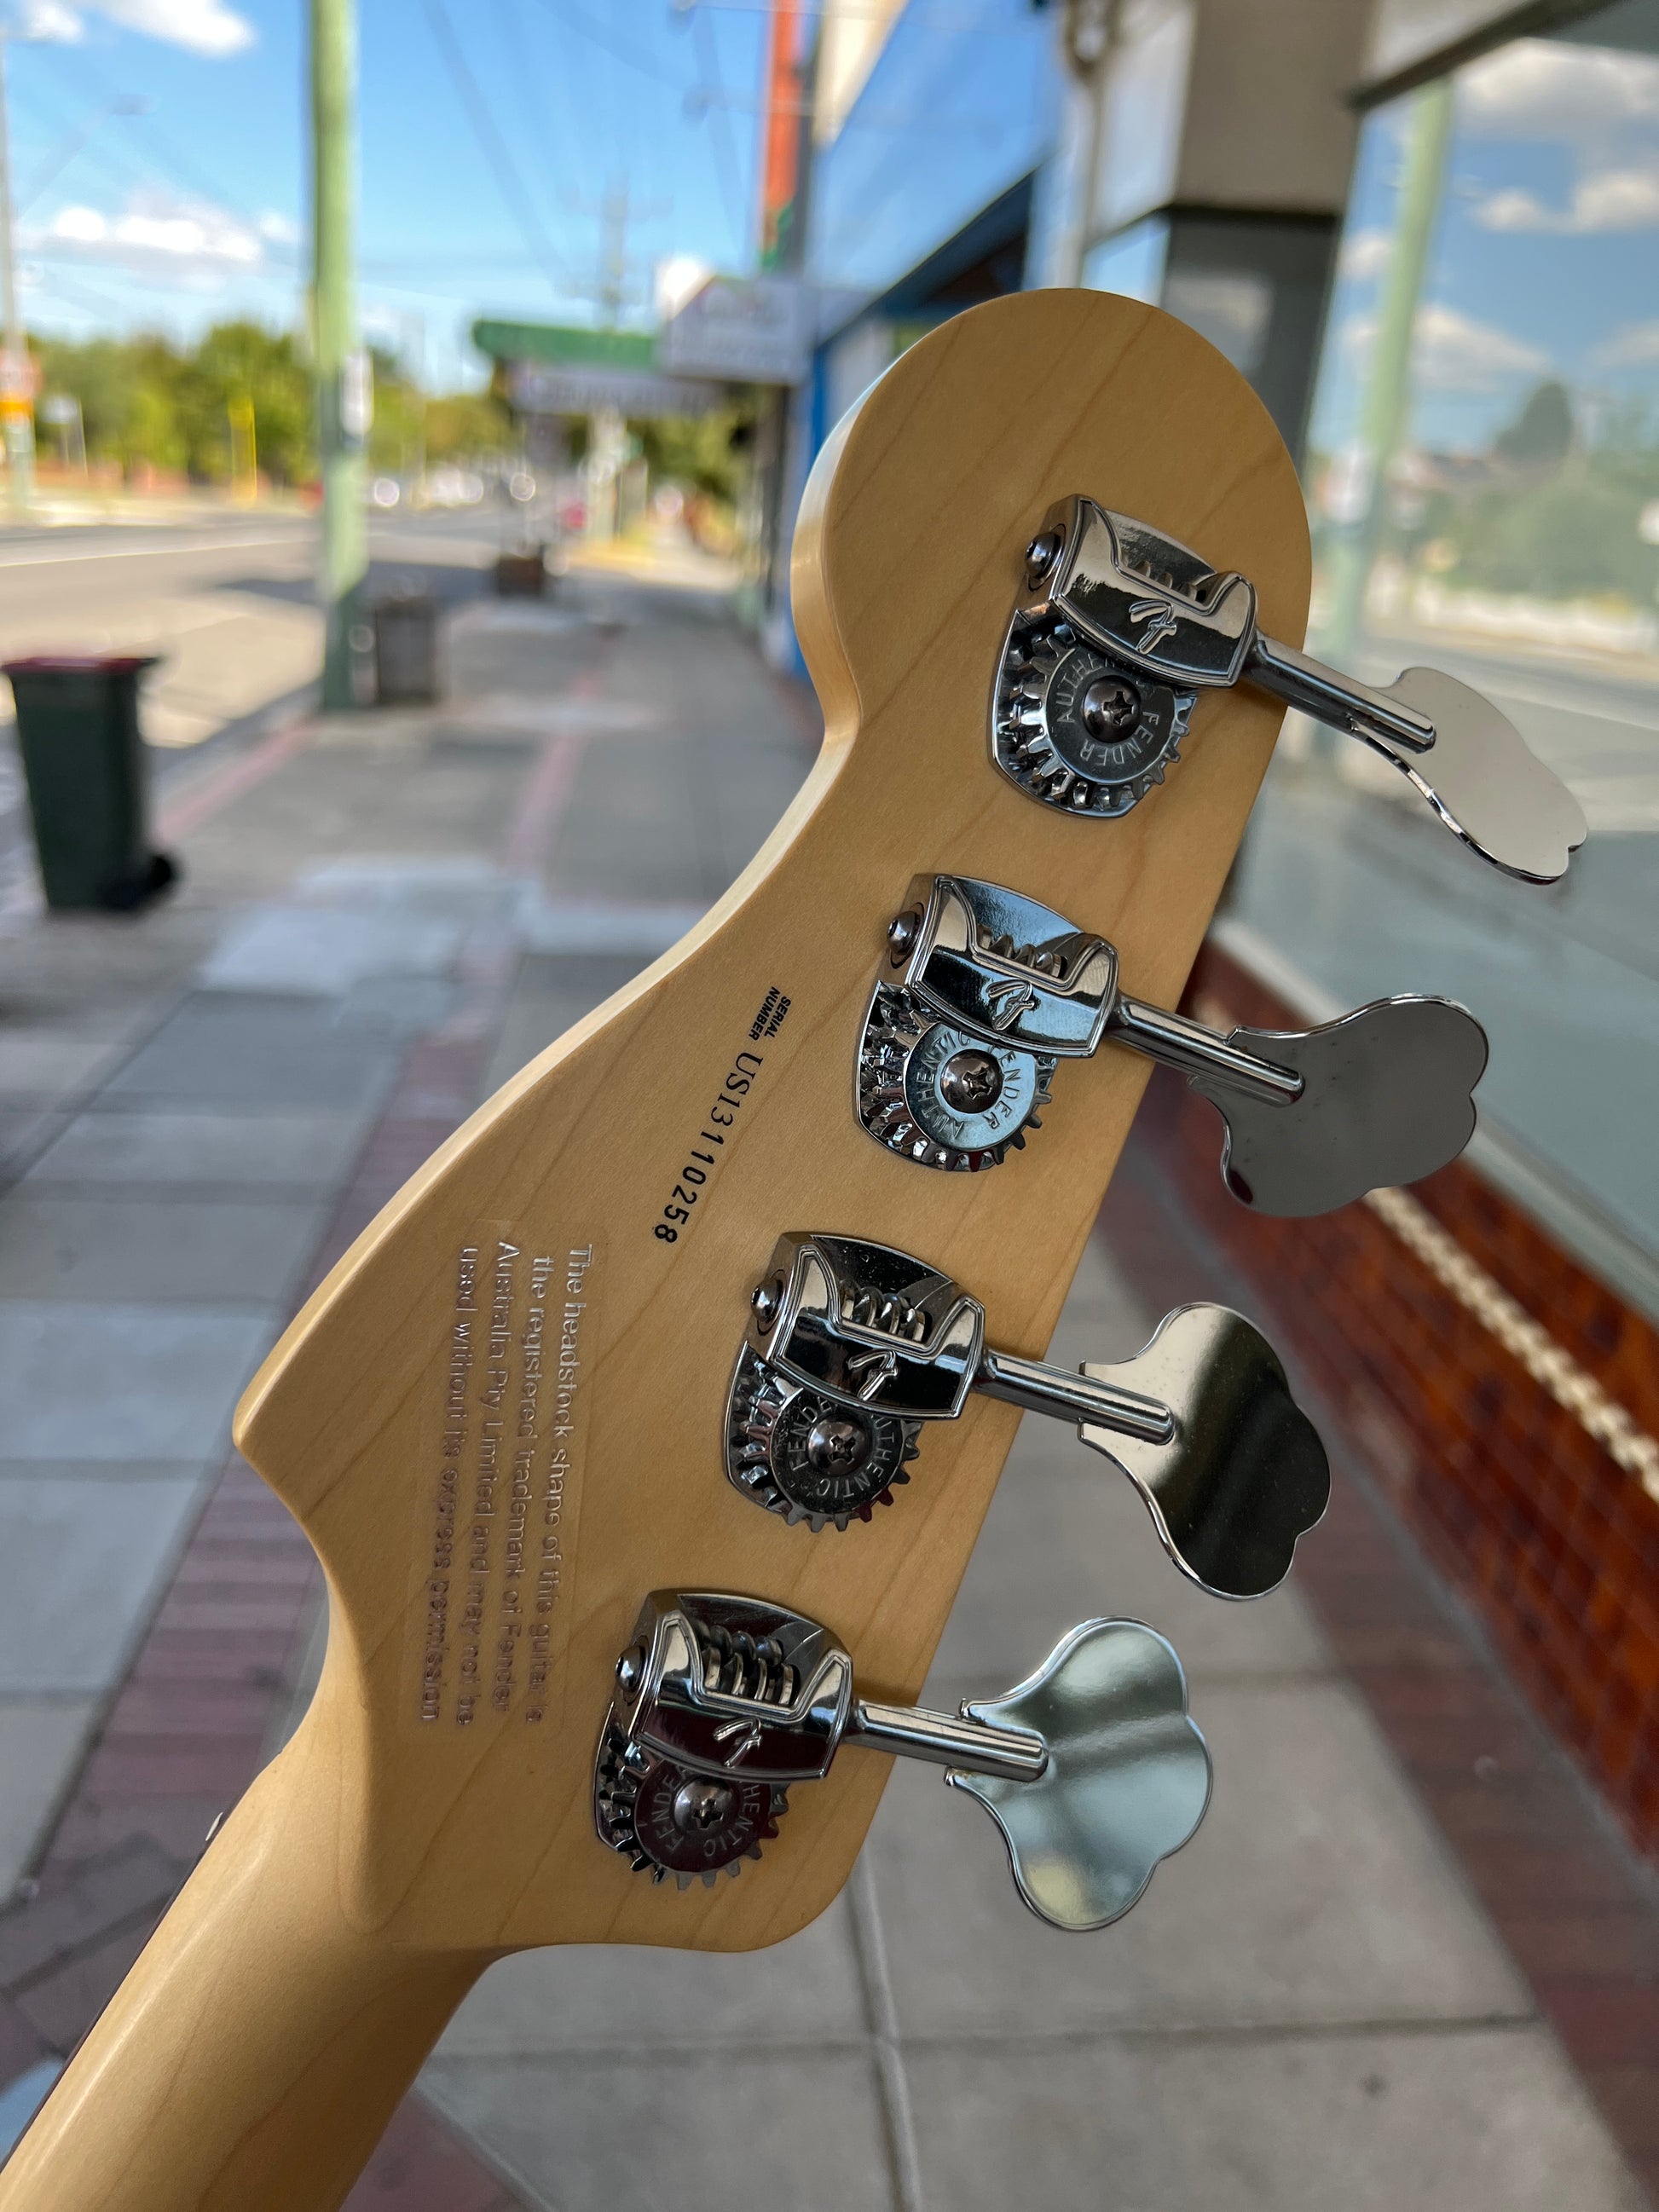 Fender American Standard Precision Bass | 2013 | Sunburst